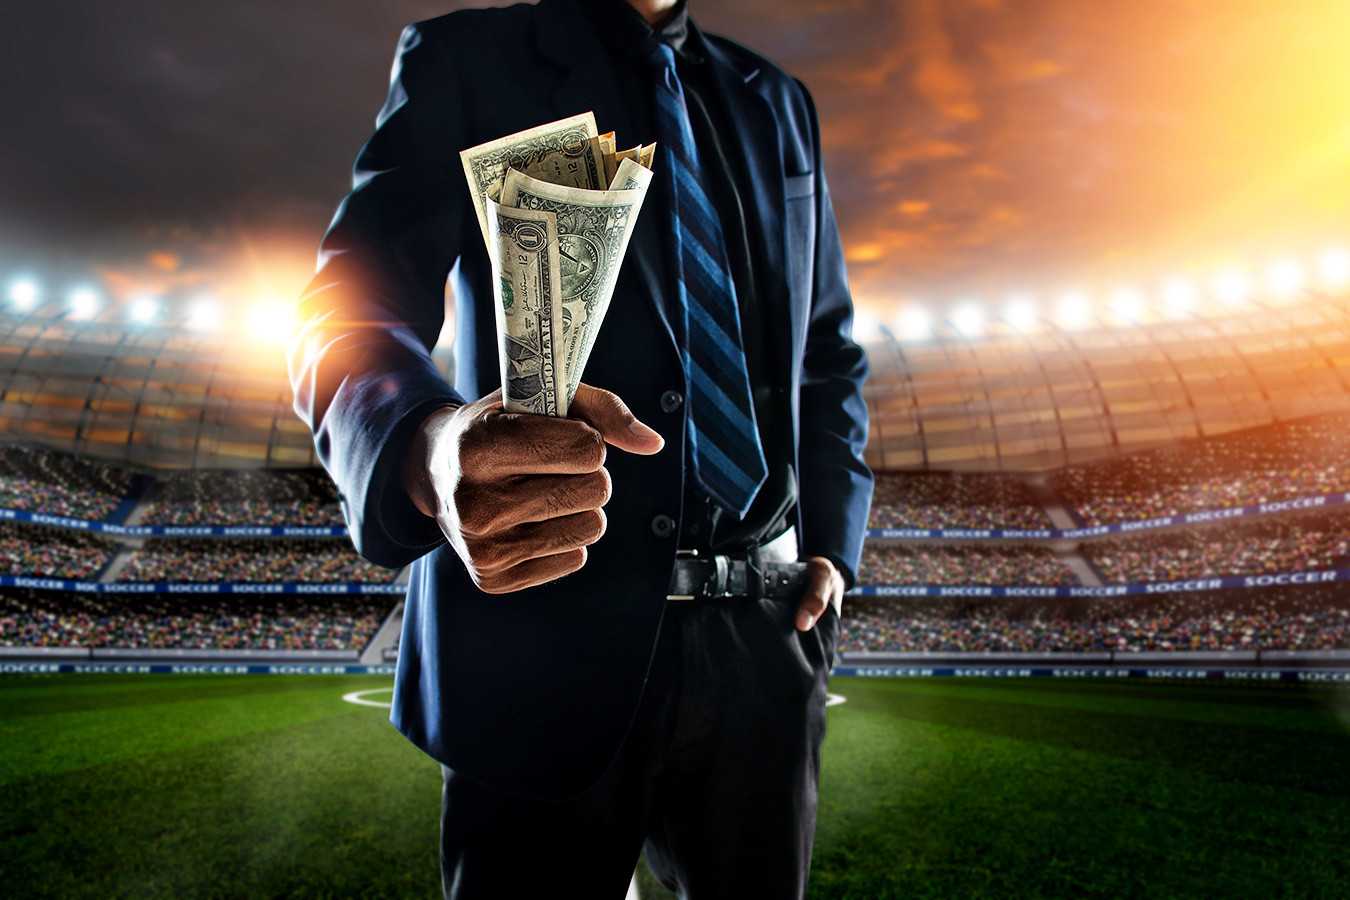 iris sports betting and corruption